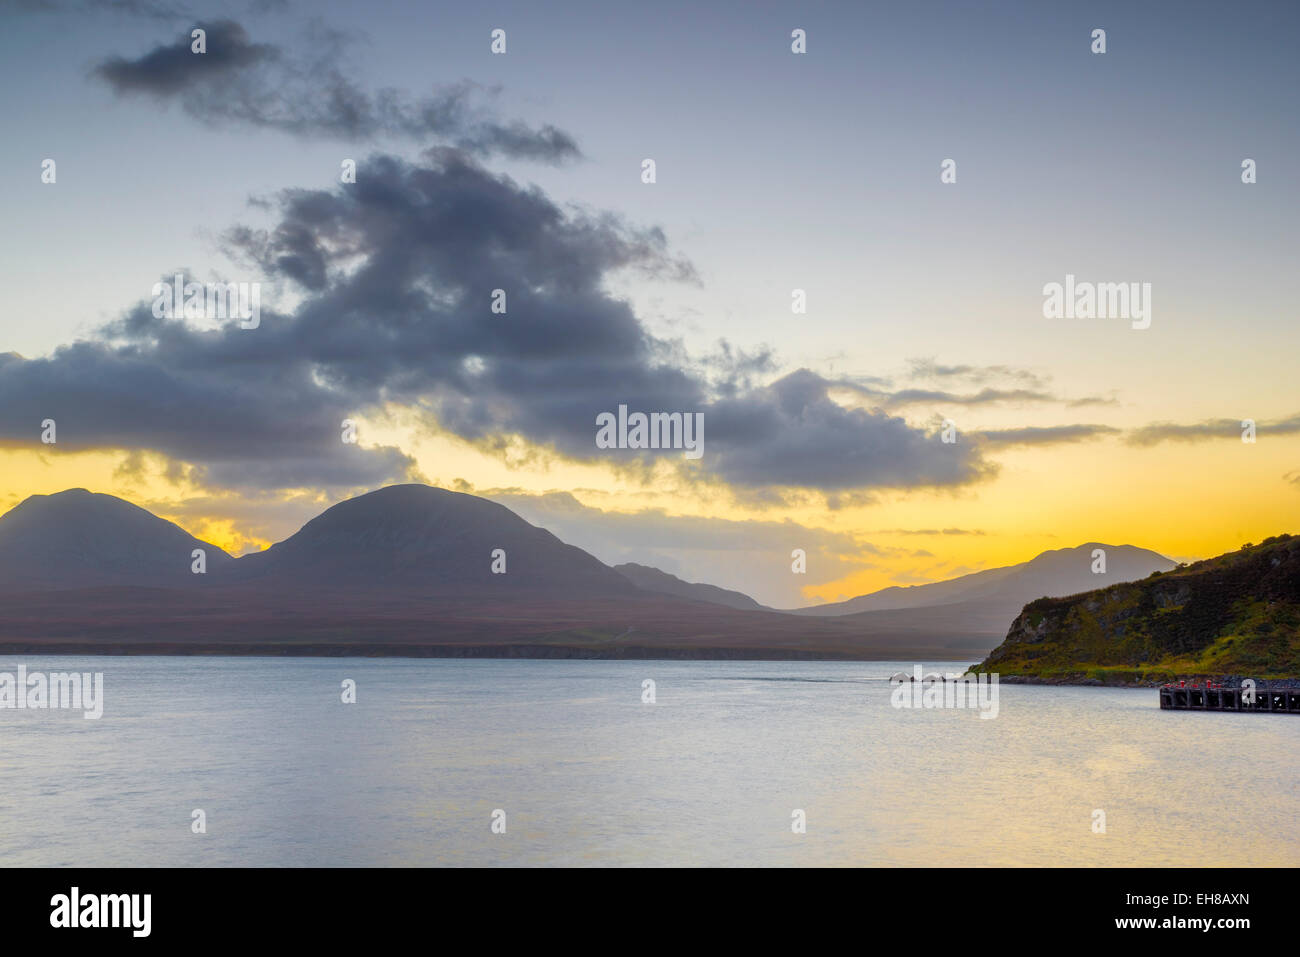 Isle of Jura and Paps of Jura Mountains across Bunnahabhain Bay and Sound of Islay from Islay, Argyll and Bute, Scotland, UK Stock Photo